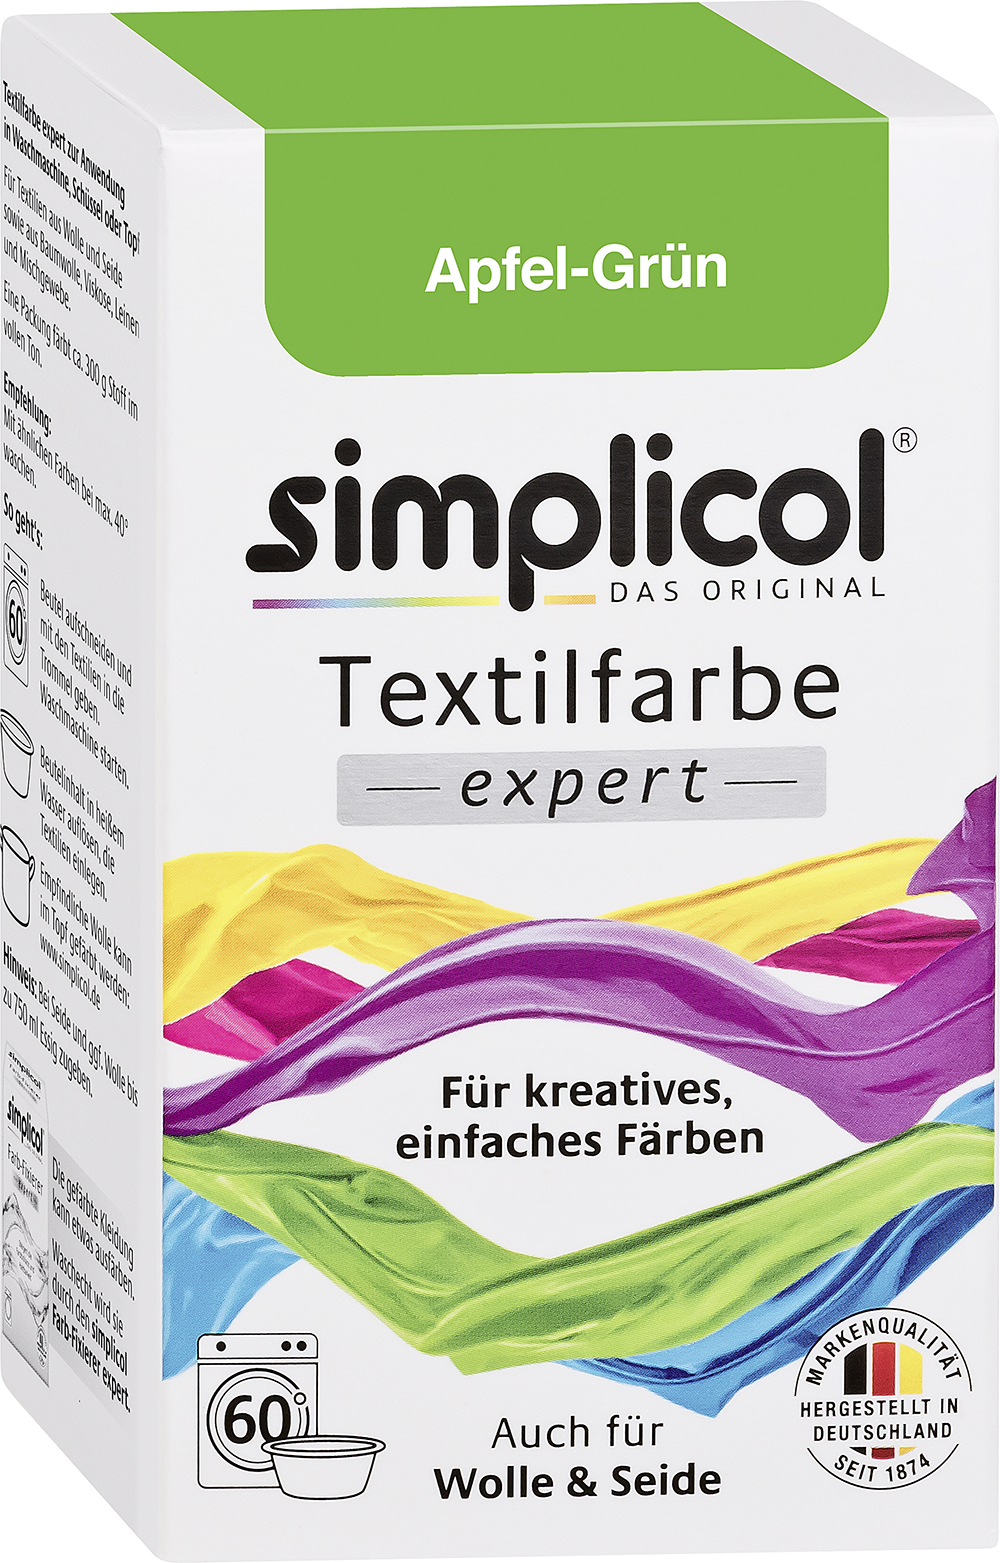 SIMPLICOL Textilfarbe Expert 150g apfelgrün